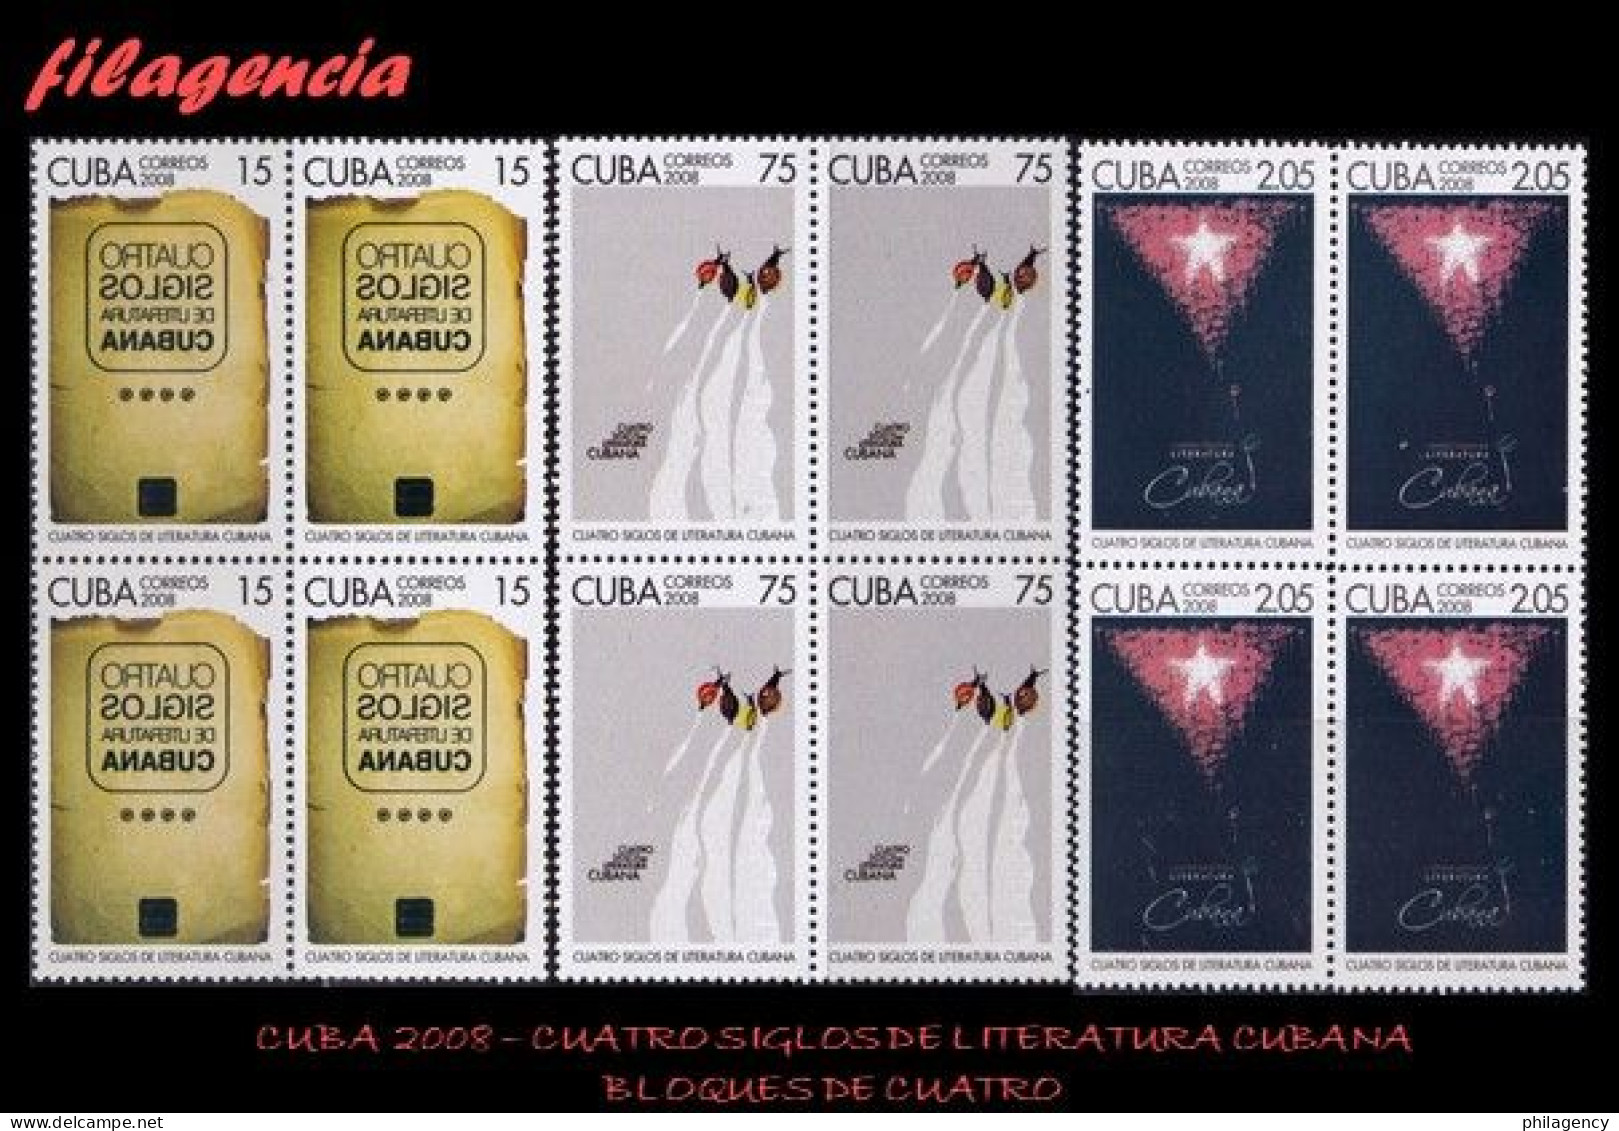 CUBA. BLOQUES DE CUATRO. 2008-28 CUATRO SIGLOS DE LITERATURA CUBANA - Unused Stamps